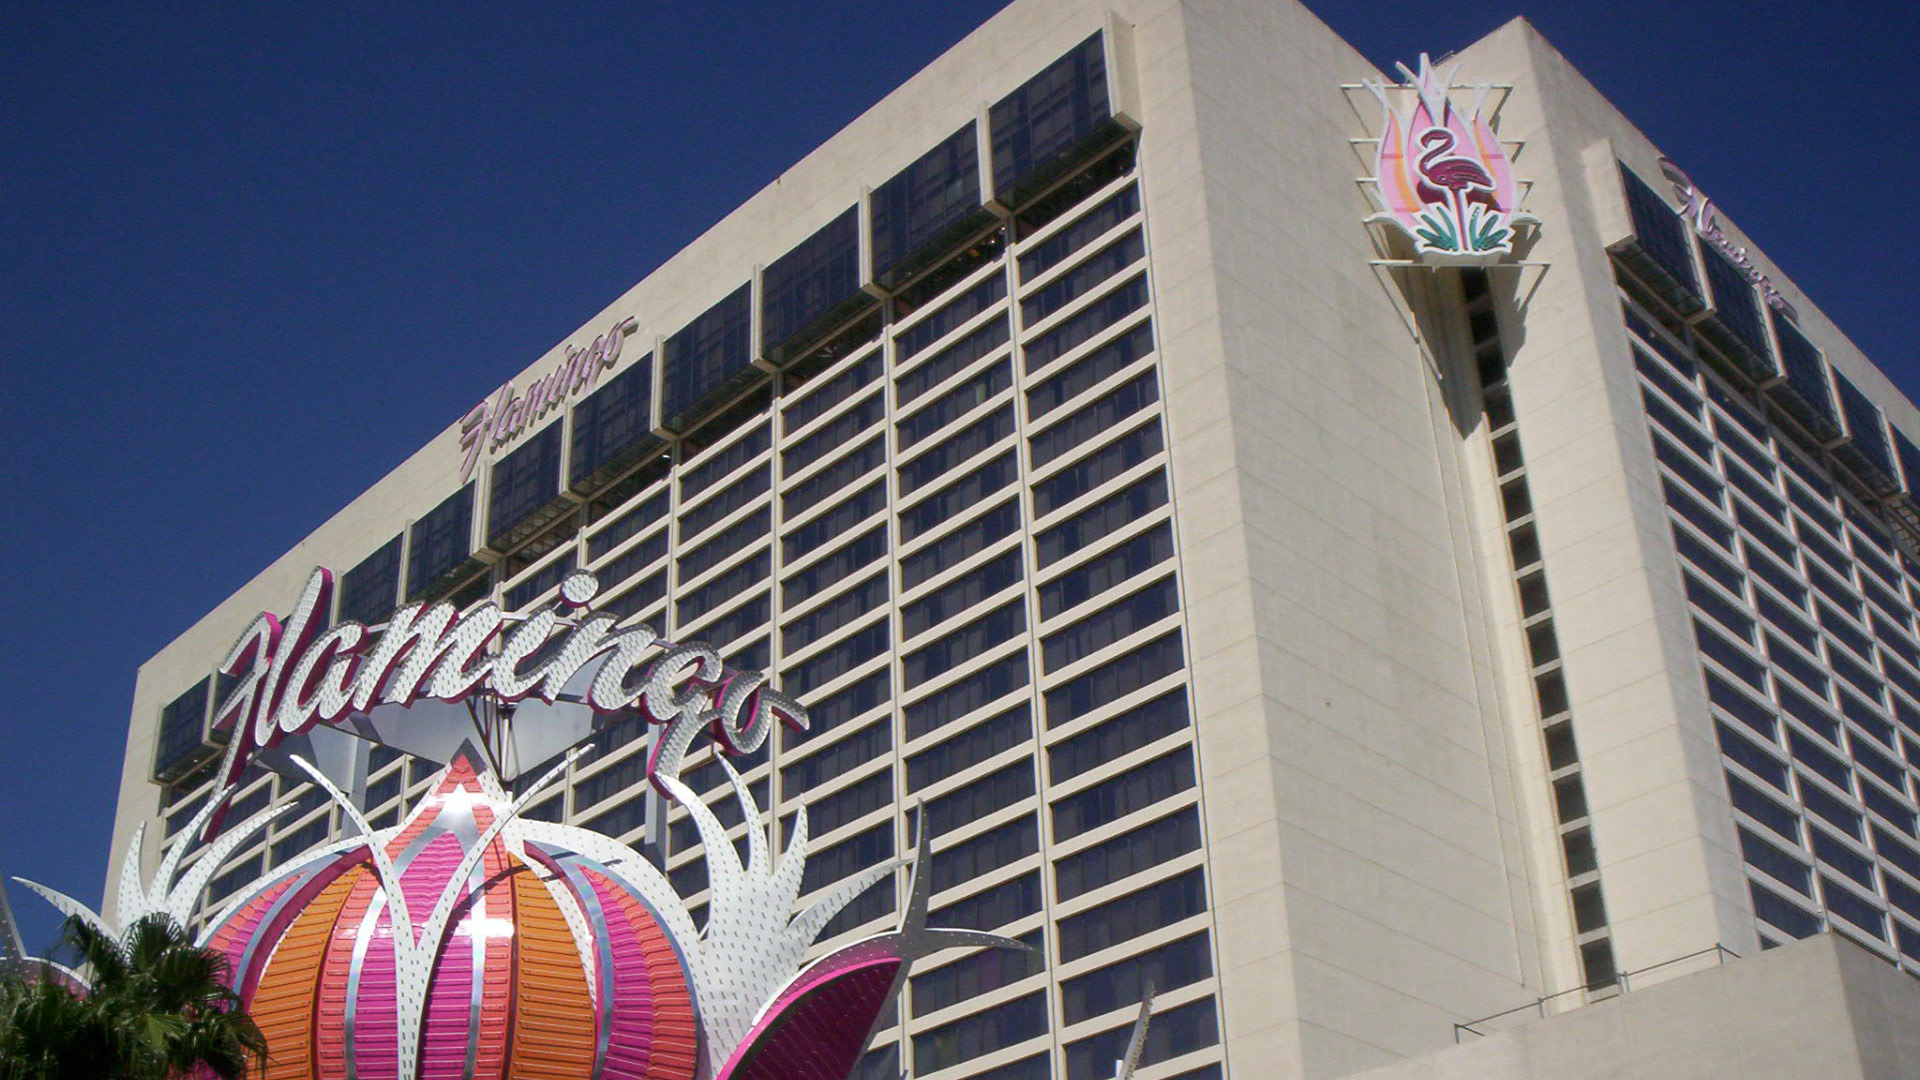 Flamingo Las Vegas Hotel & Casino from $12. Las Vegas Hotel Deals